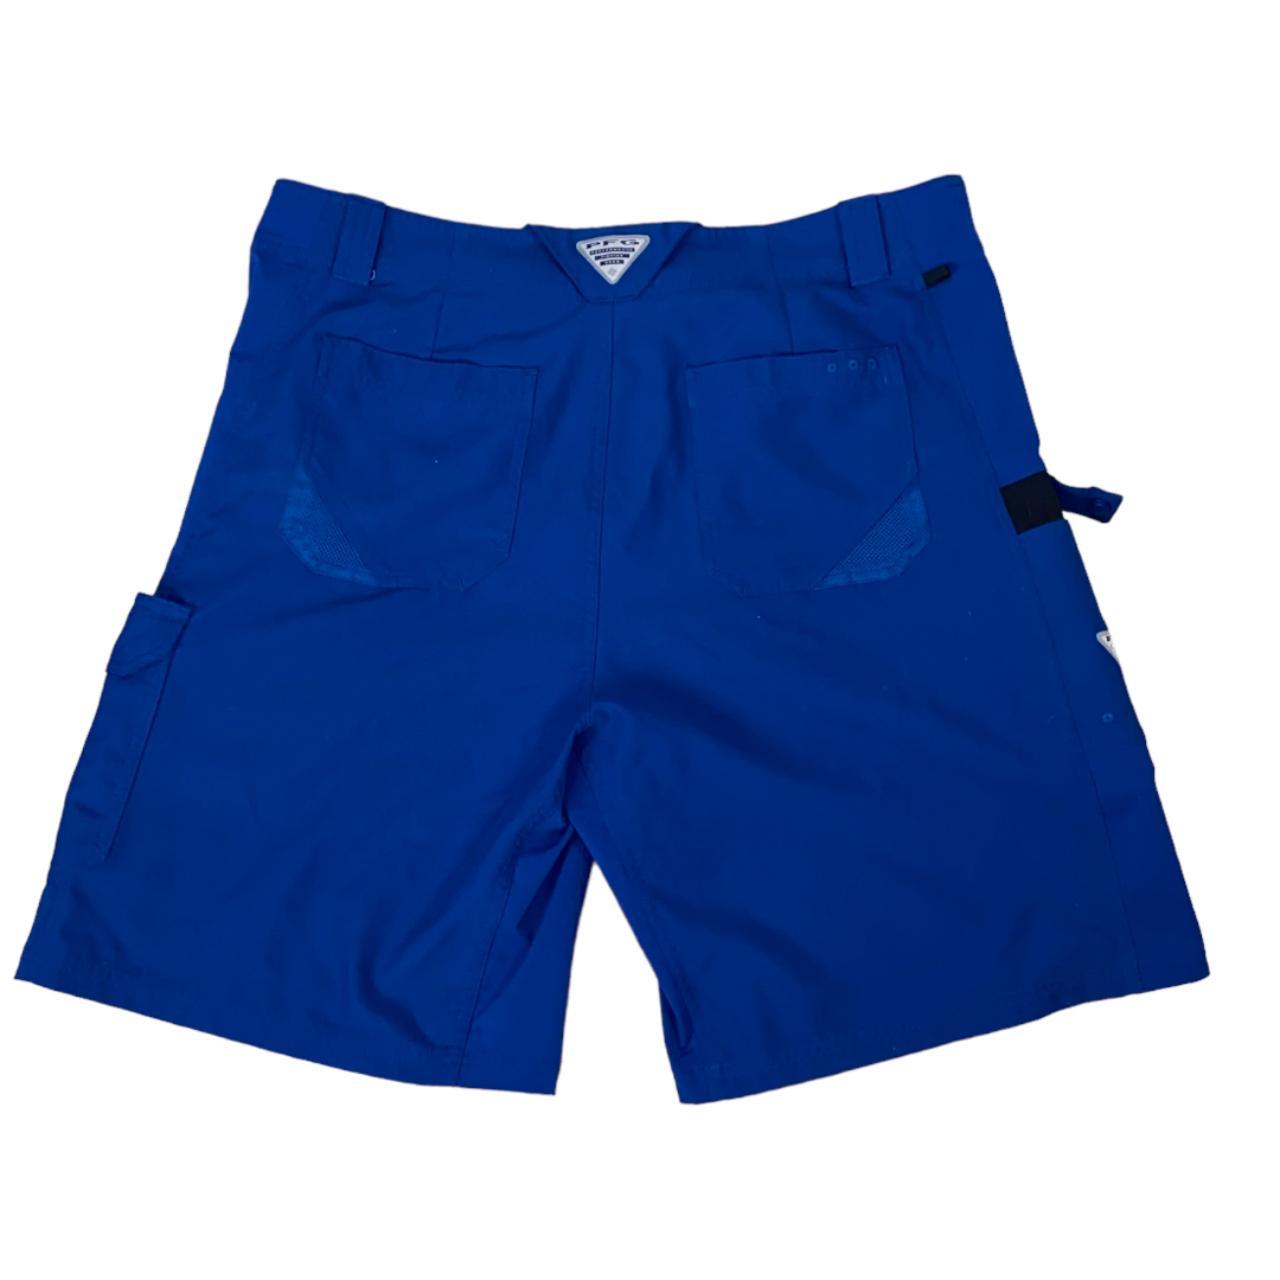 Columbia shorts Blue Columbia Omni-shade PFG - Depop